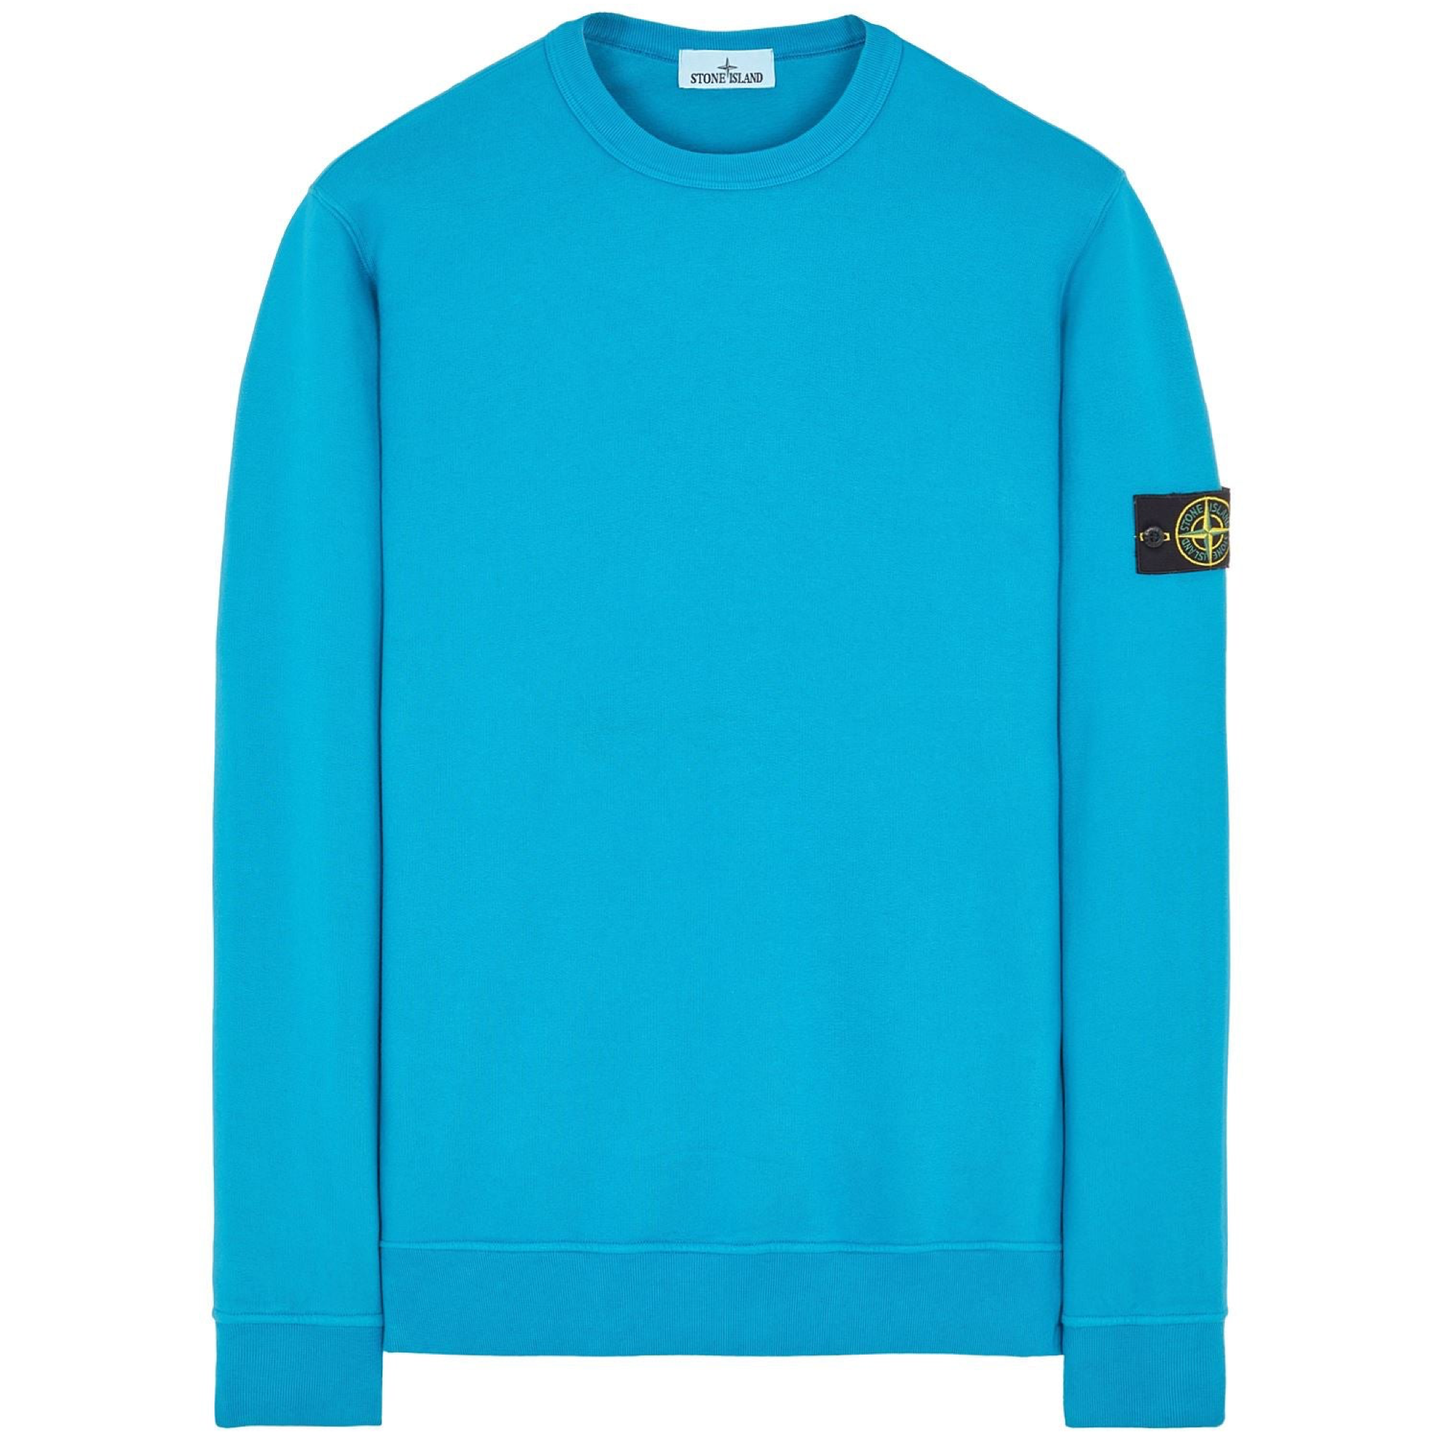 Stone Island Turquoise Garment Dyed Sweatshirt - DANYOUNGUK